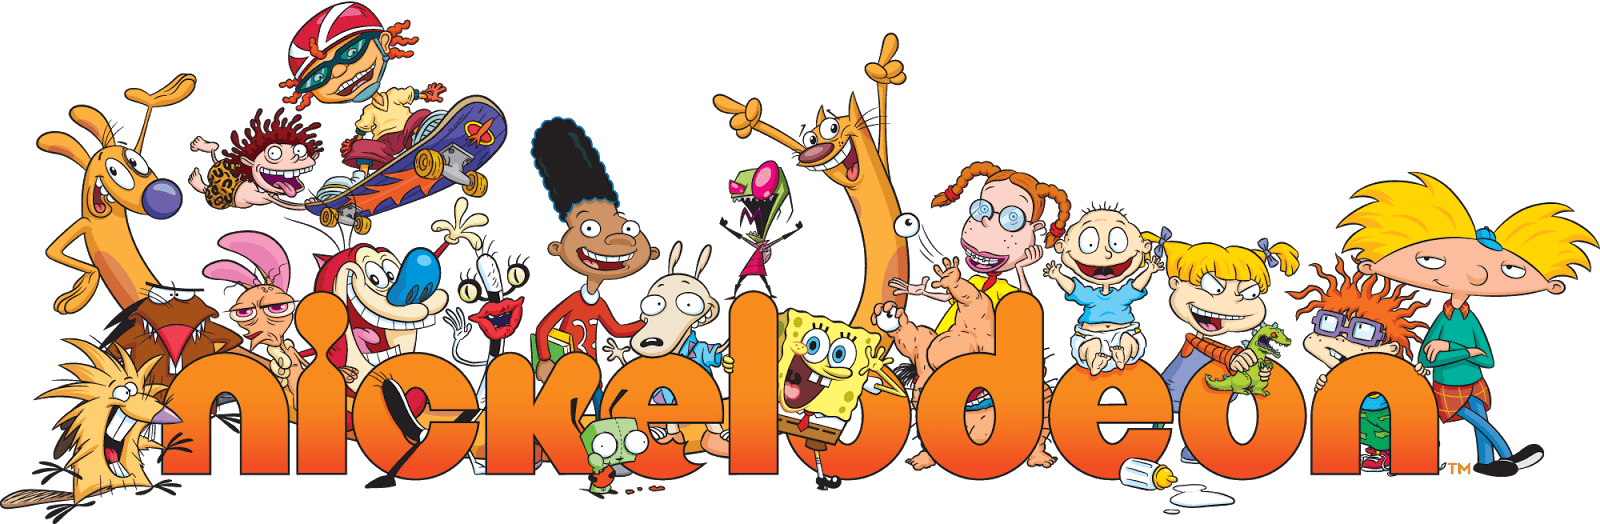 2018 Nickelodeon Logo - Nickelodeon Logo With 90s Nicktoons Stars Characters NickSplat The